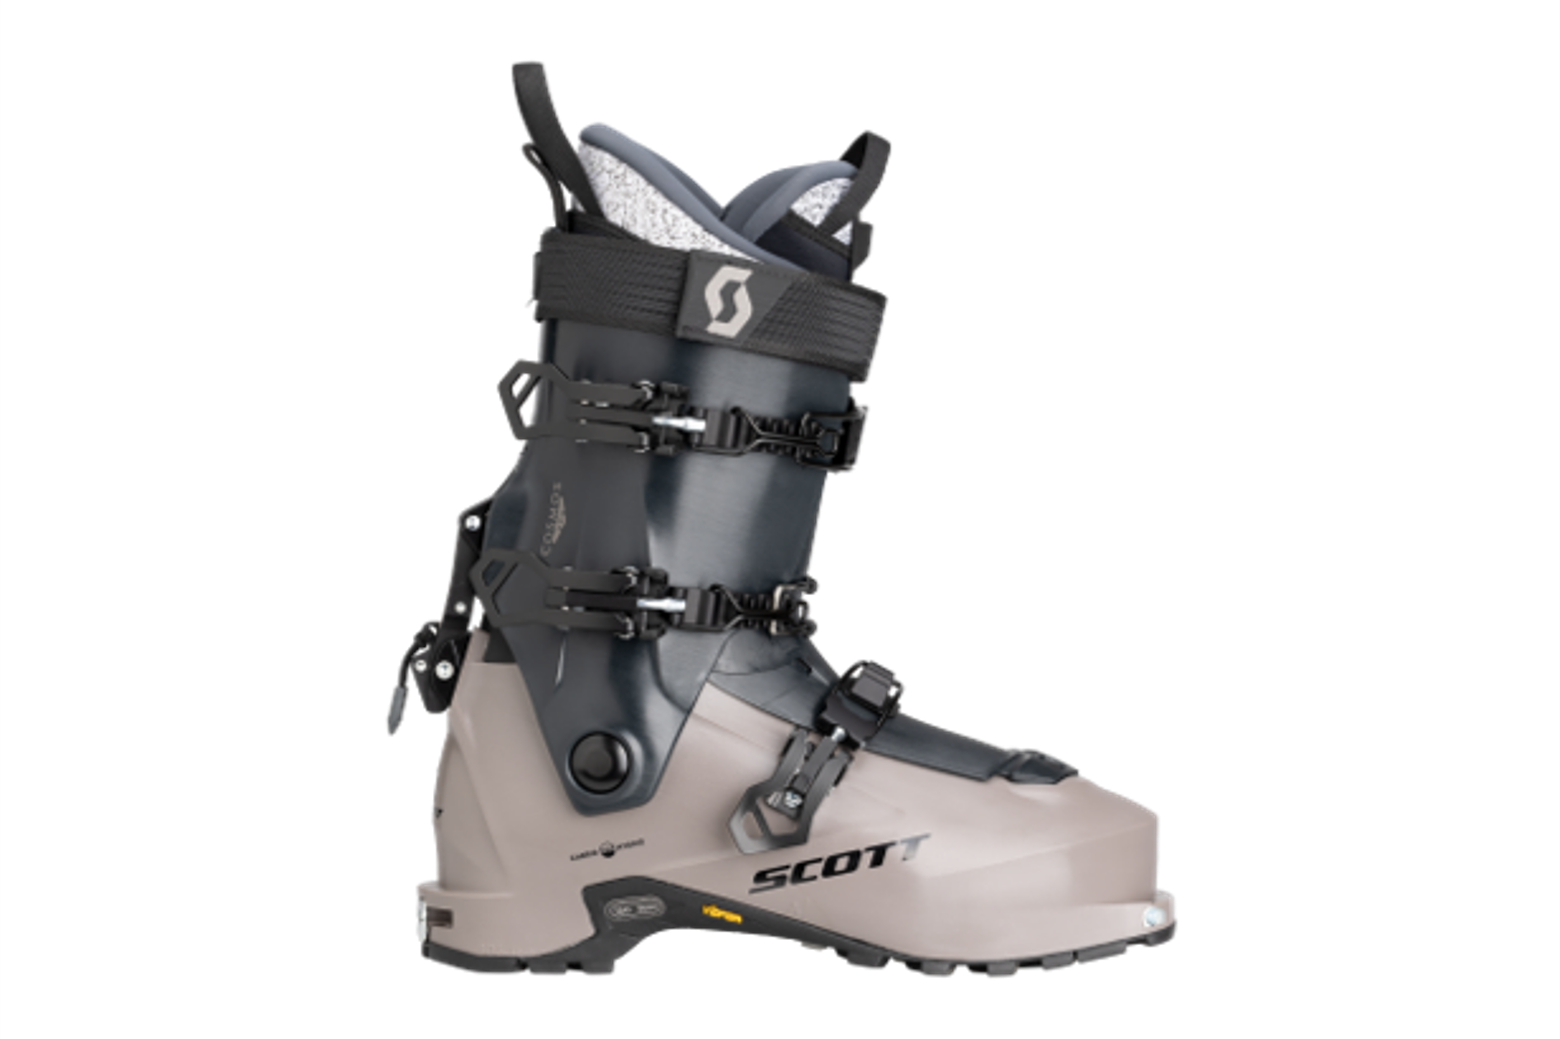 High performance ski boot from Scott Sports using Pebax materials